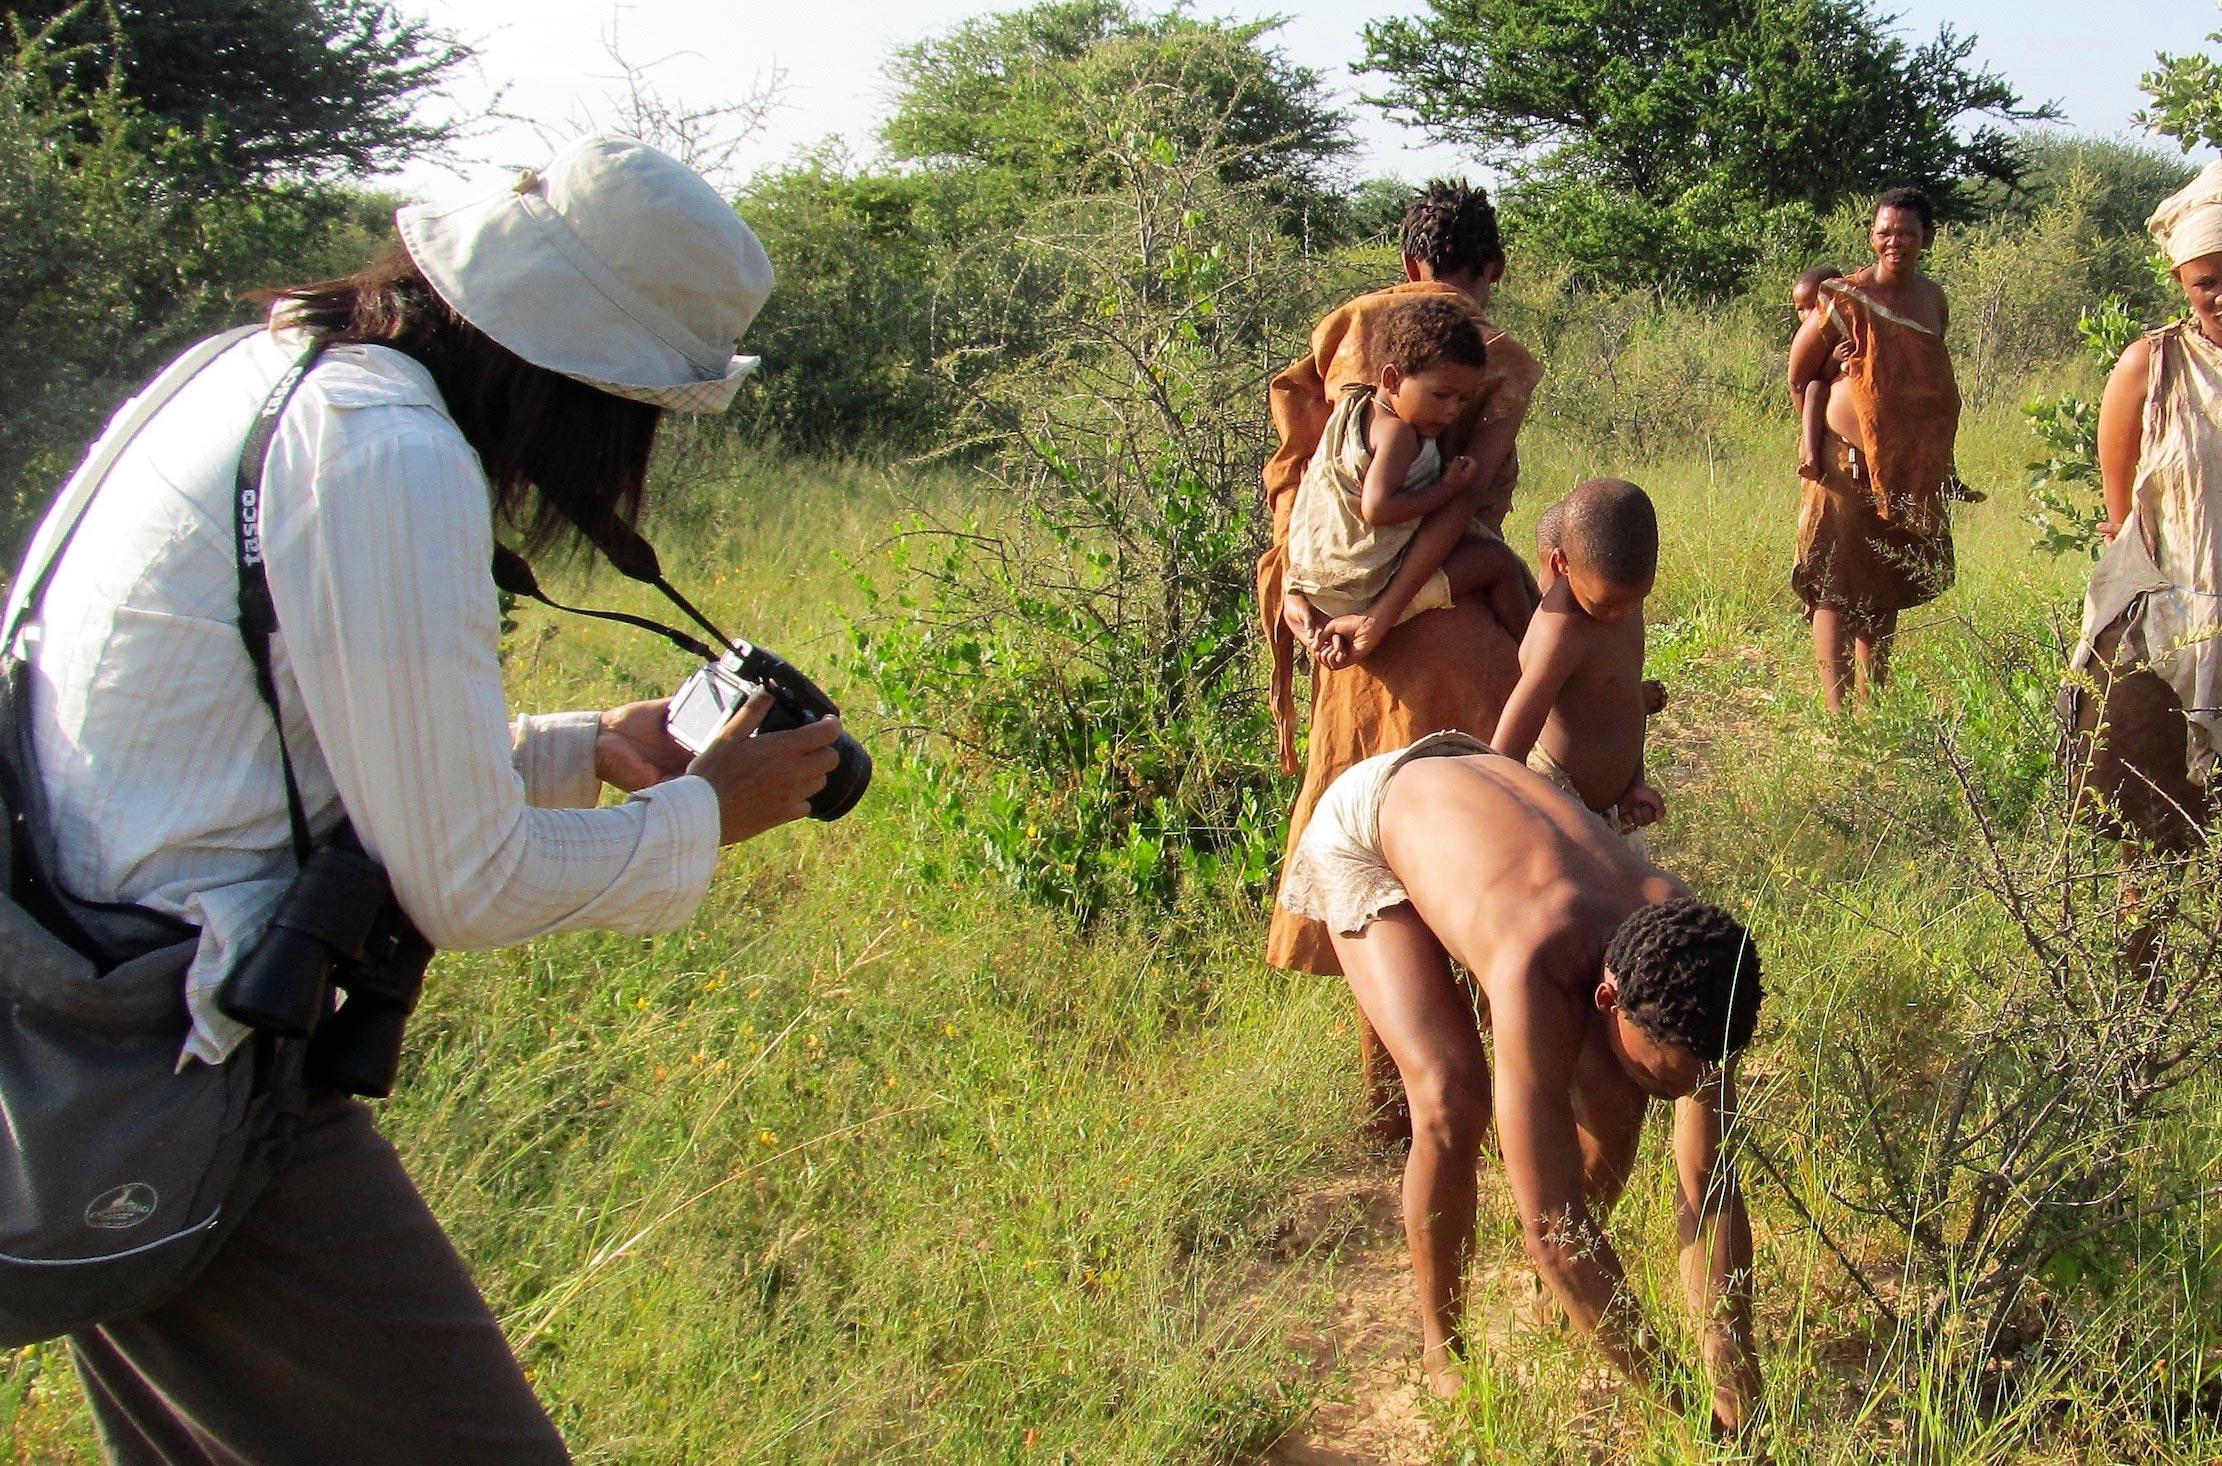 tourist enjoys 'Bushman tourism' in Botswana. Photo credit: Junko Maruyama